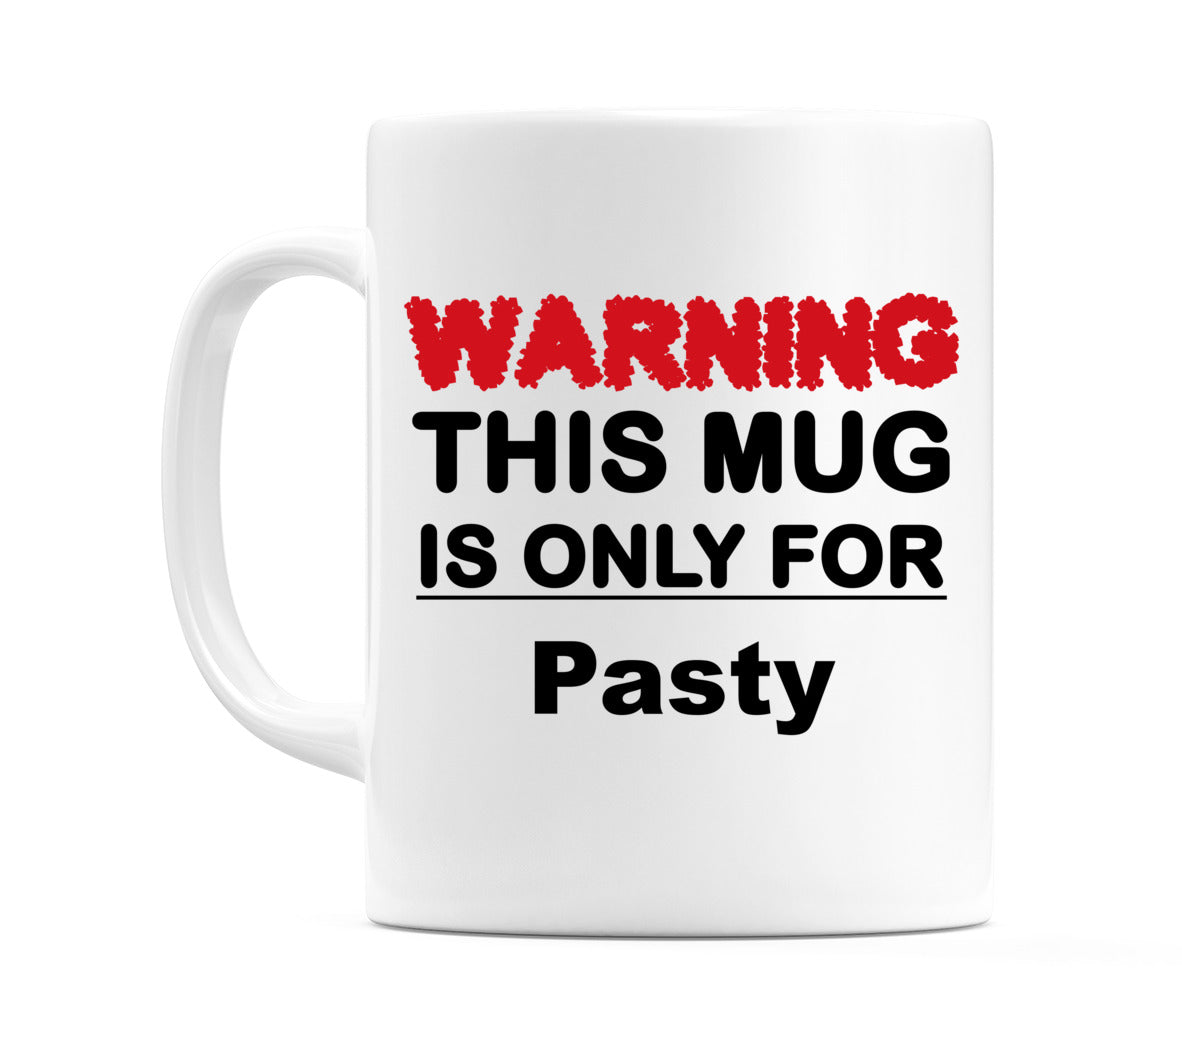 Warning This Mug is ONLY for Pasty Mug